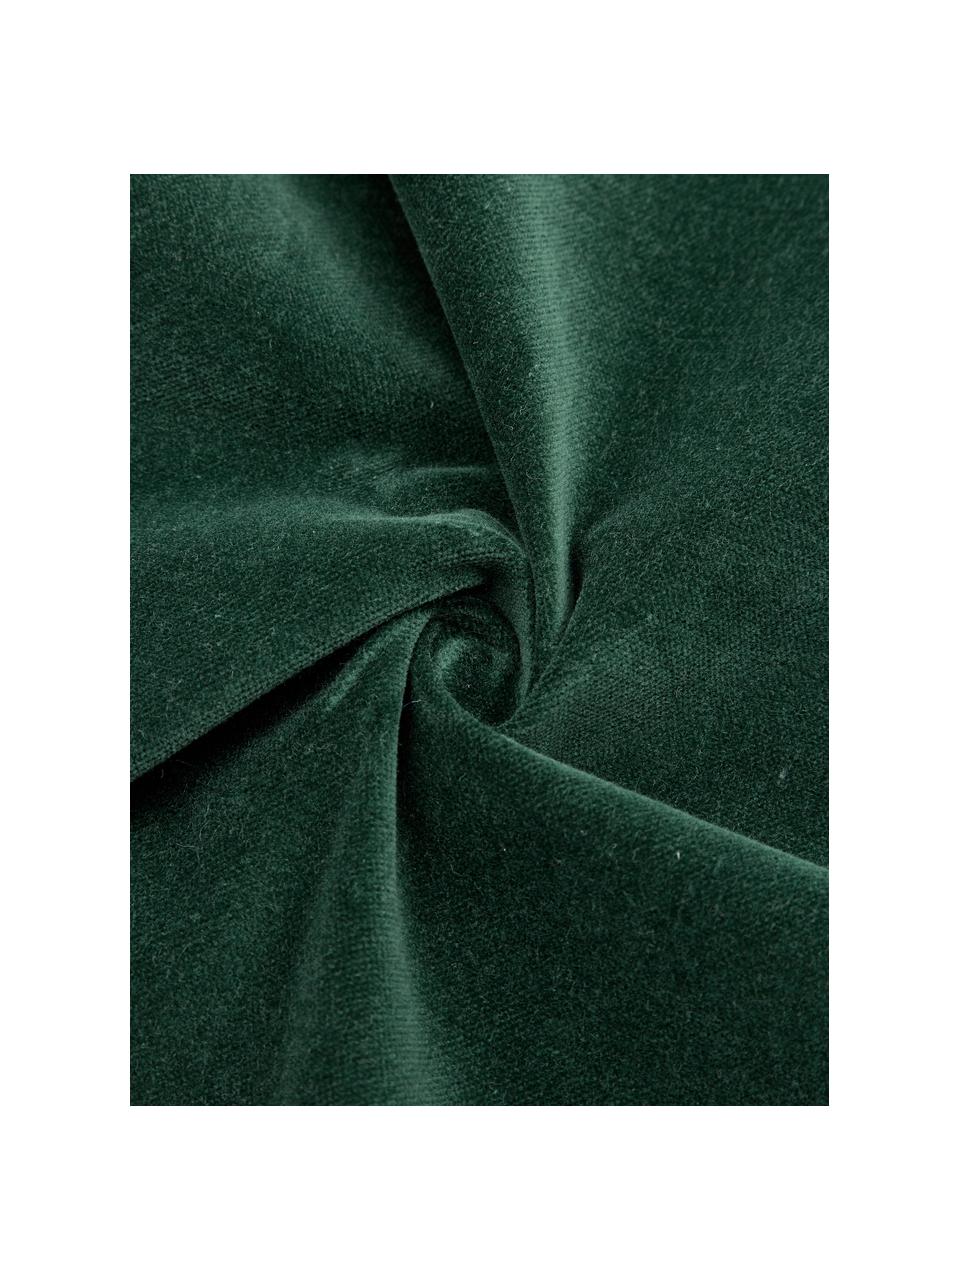 Fluwelen kussenhoes Sina in donkergroen met structuurpatroon, Fluweel (100% katoen), Donkergroen, B 45 x L 45 cm